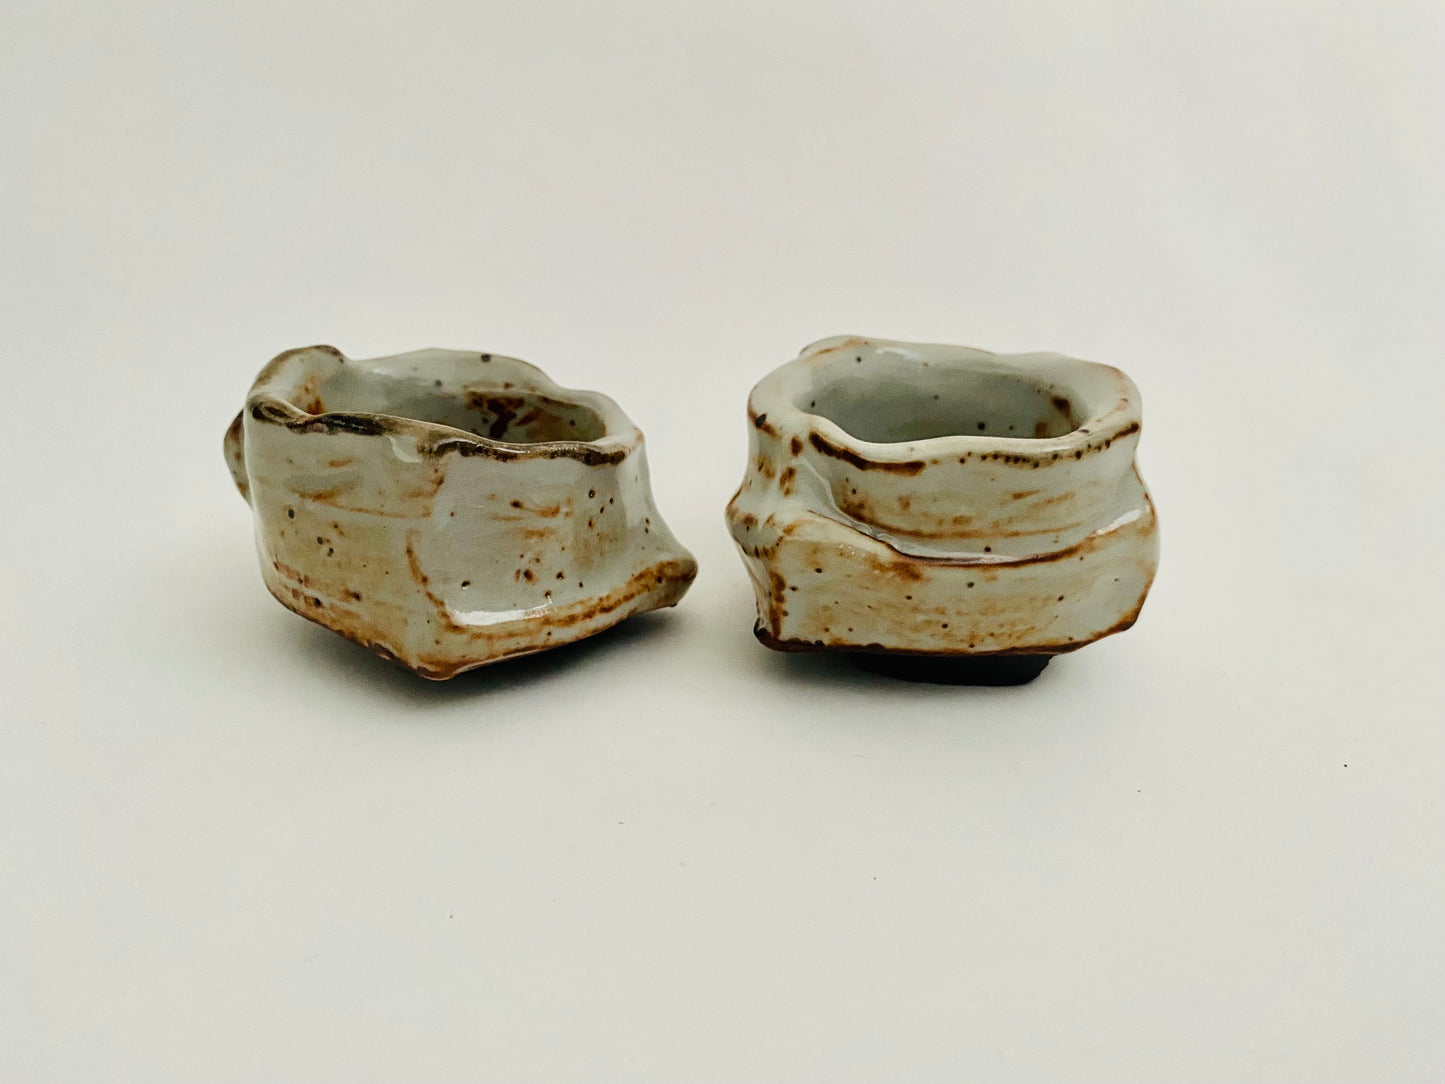 A pair of sake cups